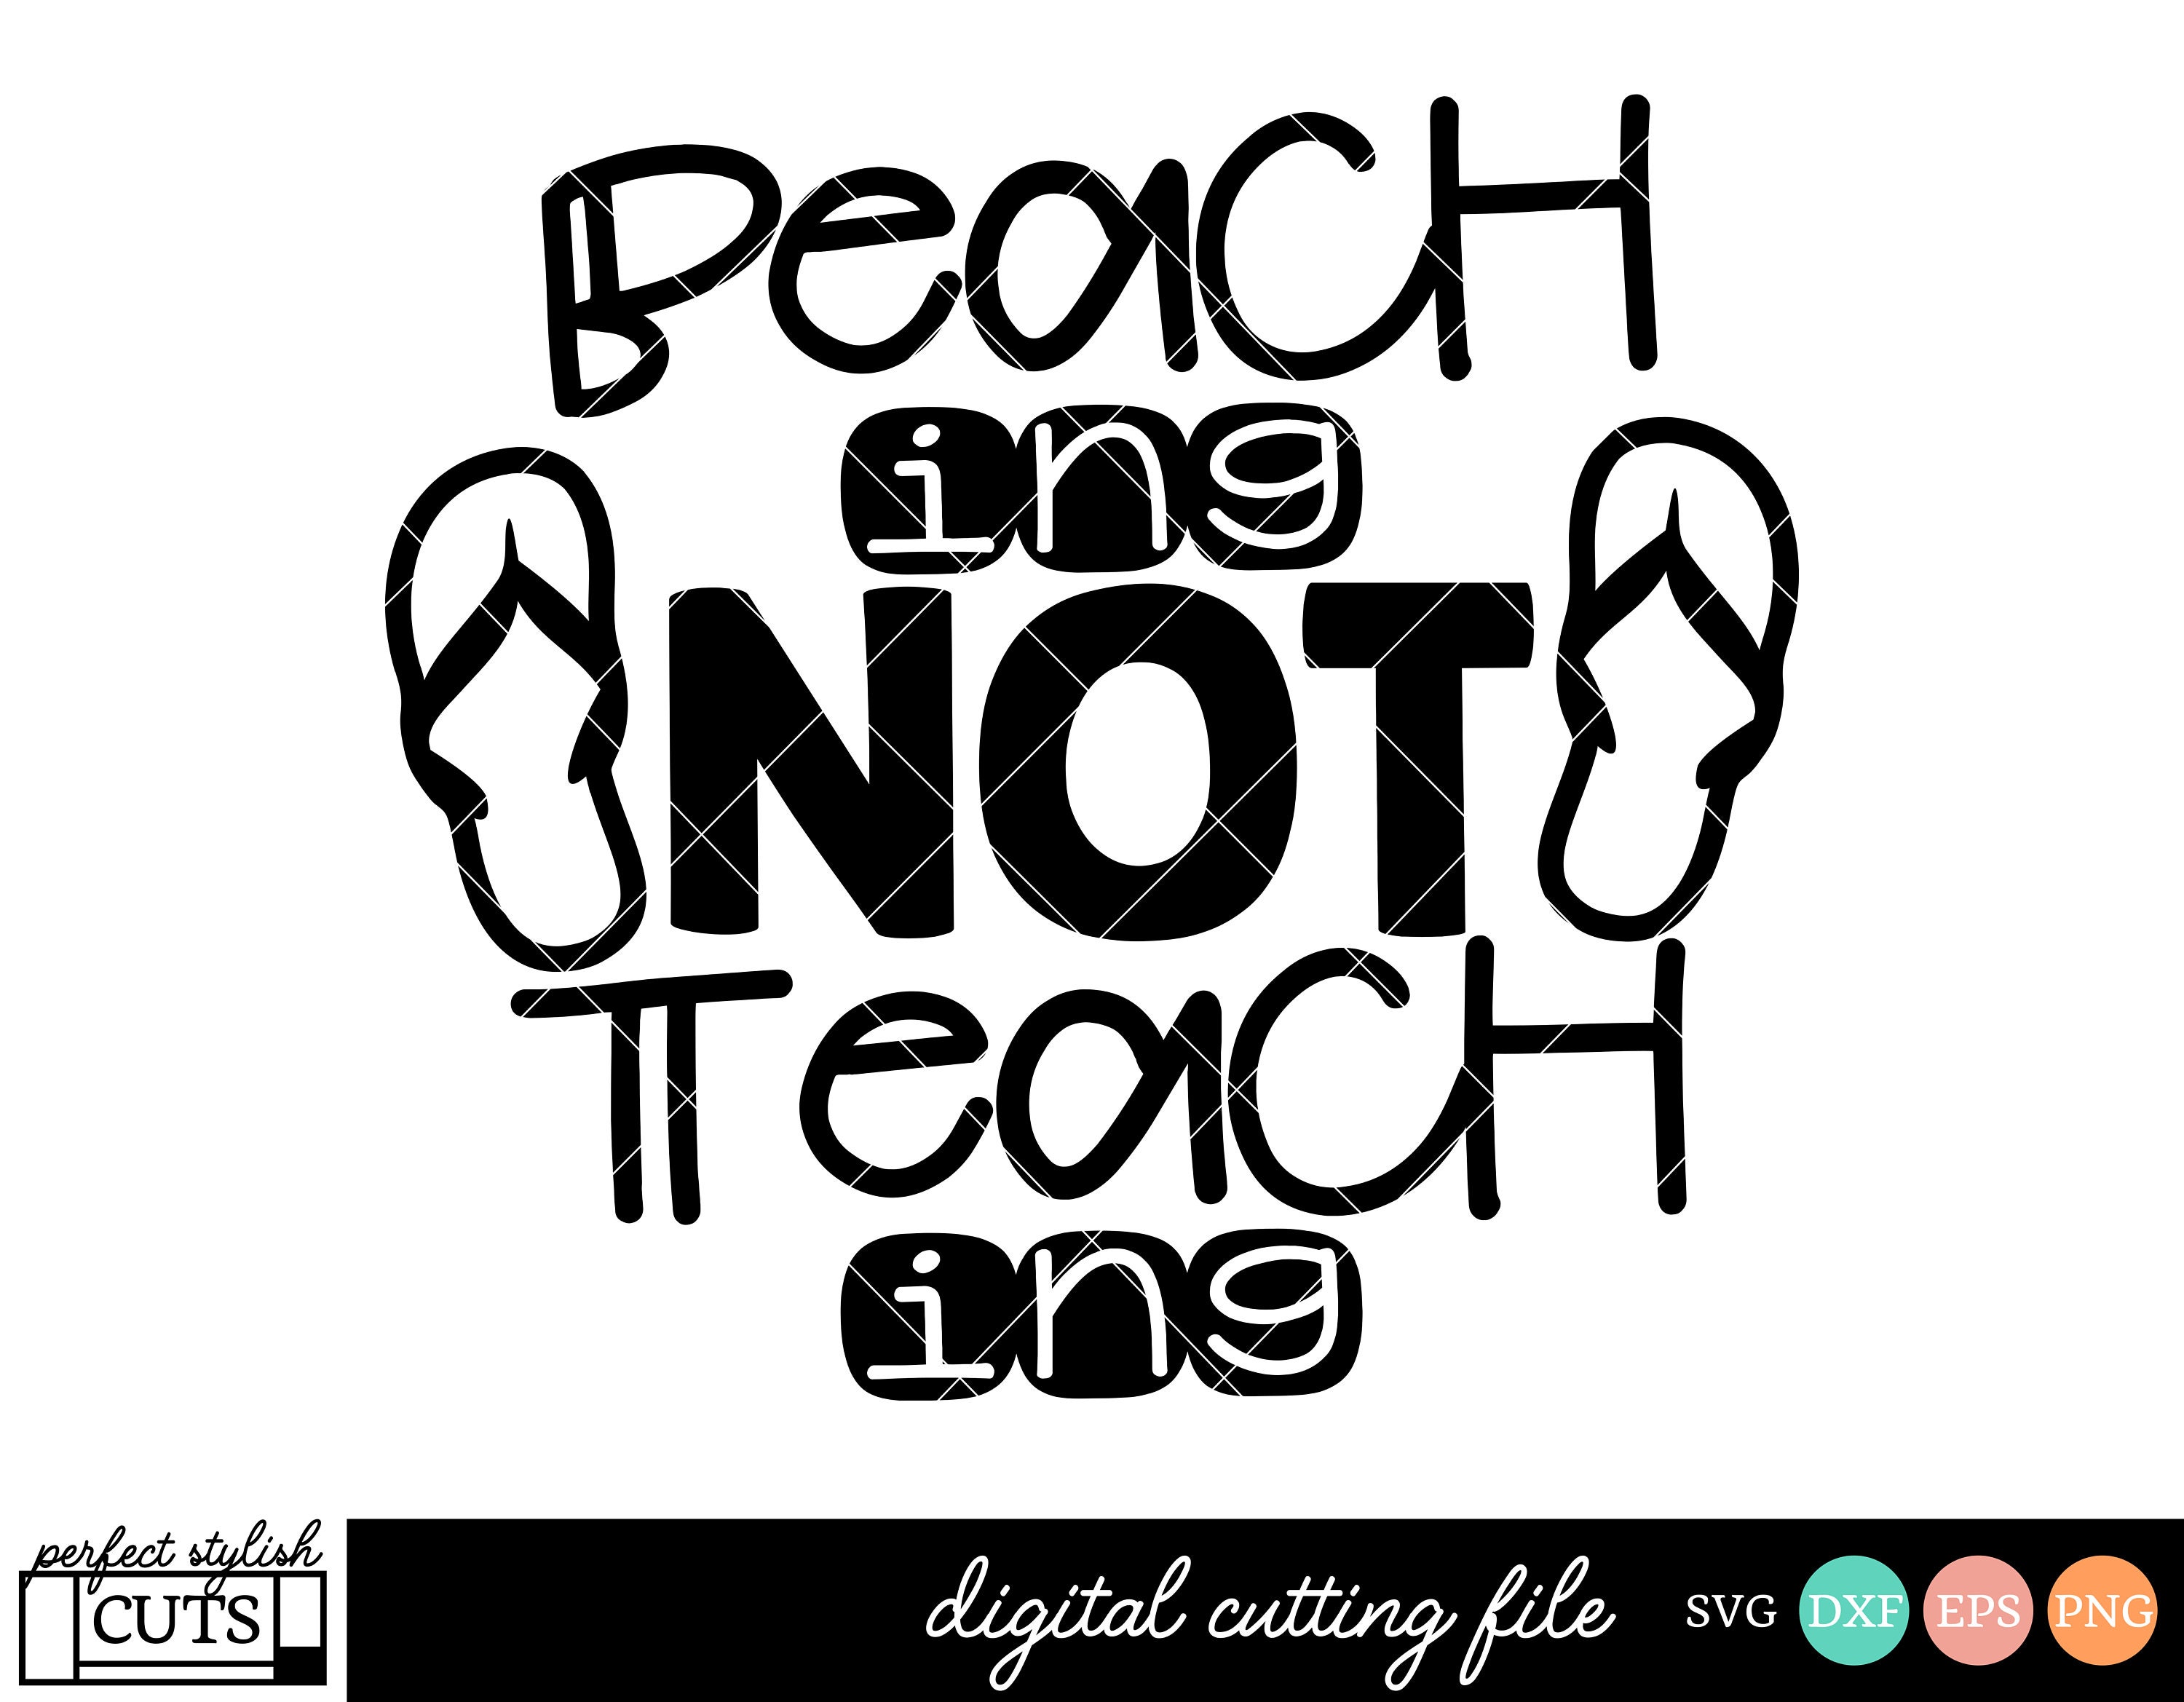 Summer Teacher Cutting File for Cricut Silhouette printable png dxf jpeg svg Teacher Svg End of School svg Beaching not Teaching SVG